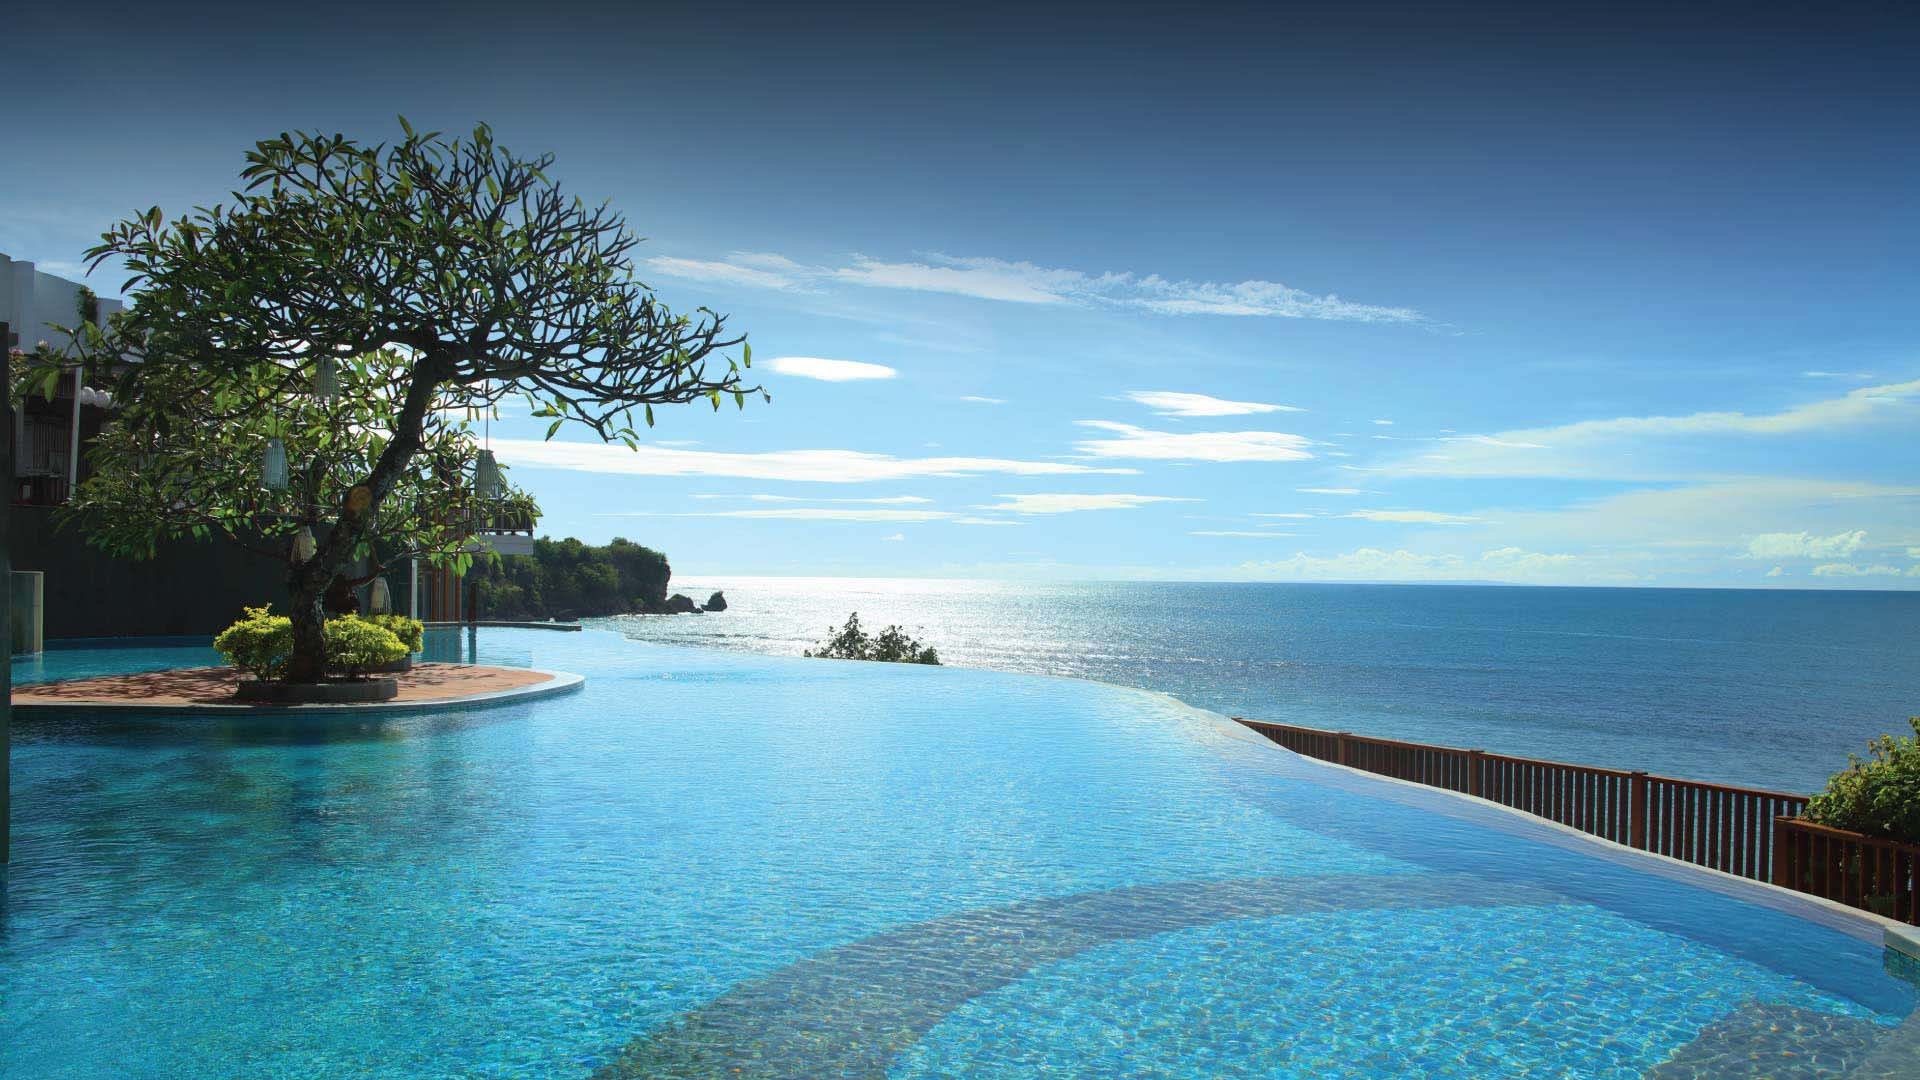 Bali resort wallpapers, Luxury retreats, Tropical paradise, Stunning visuals, 1920x1080 Full HD Desktop